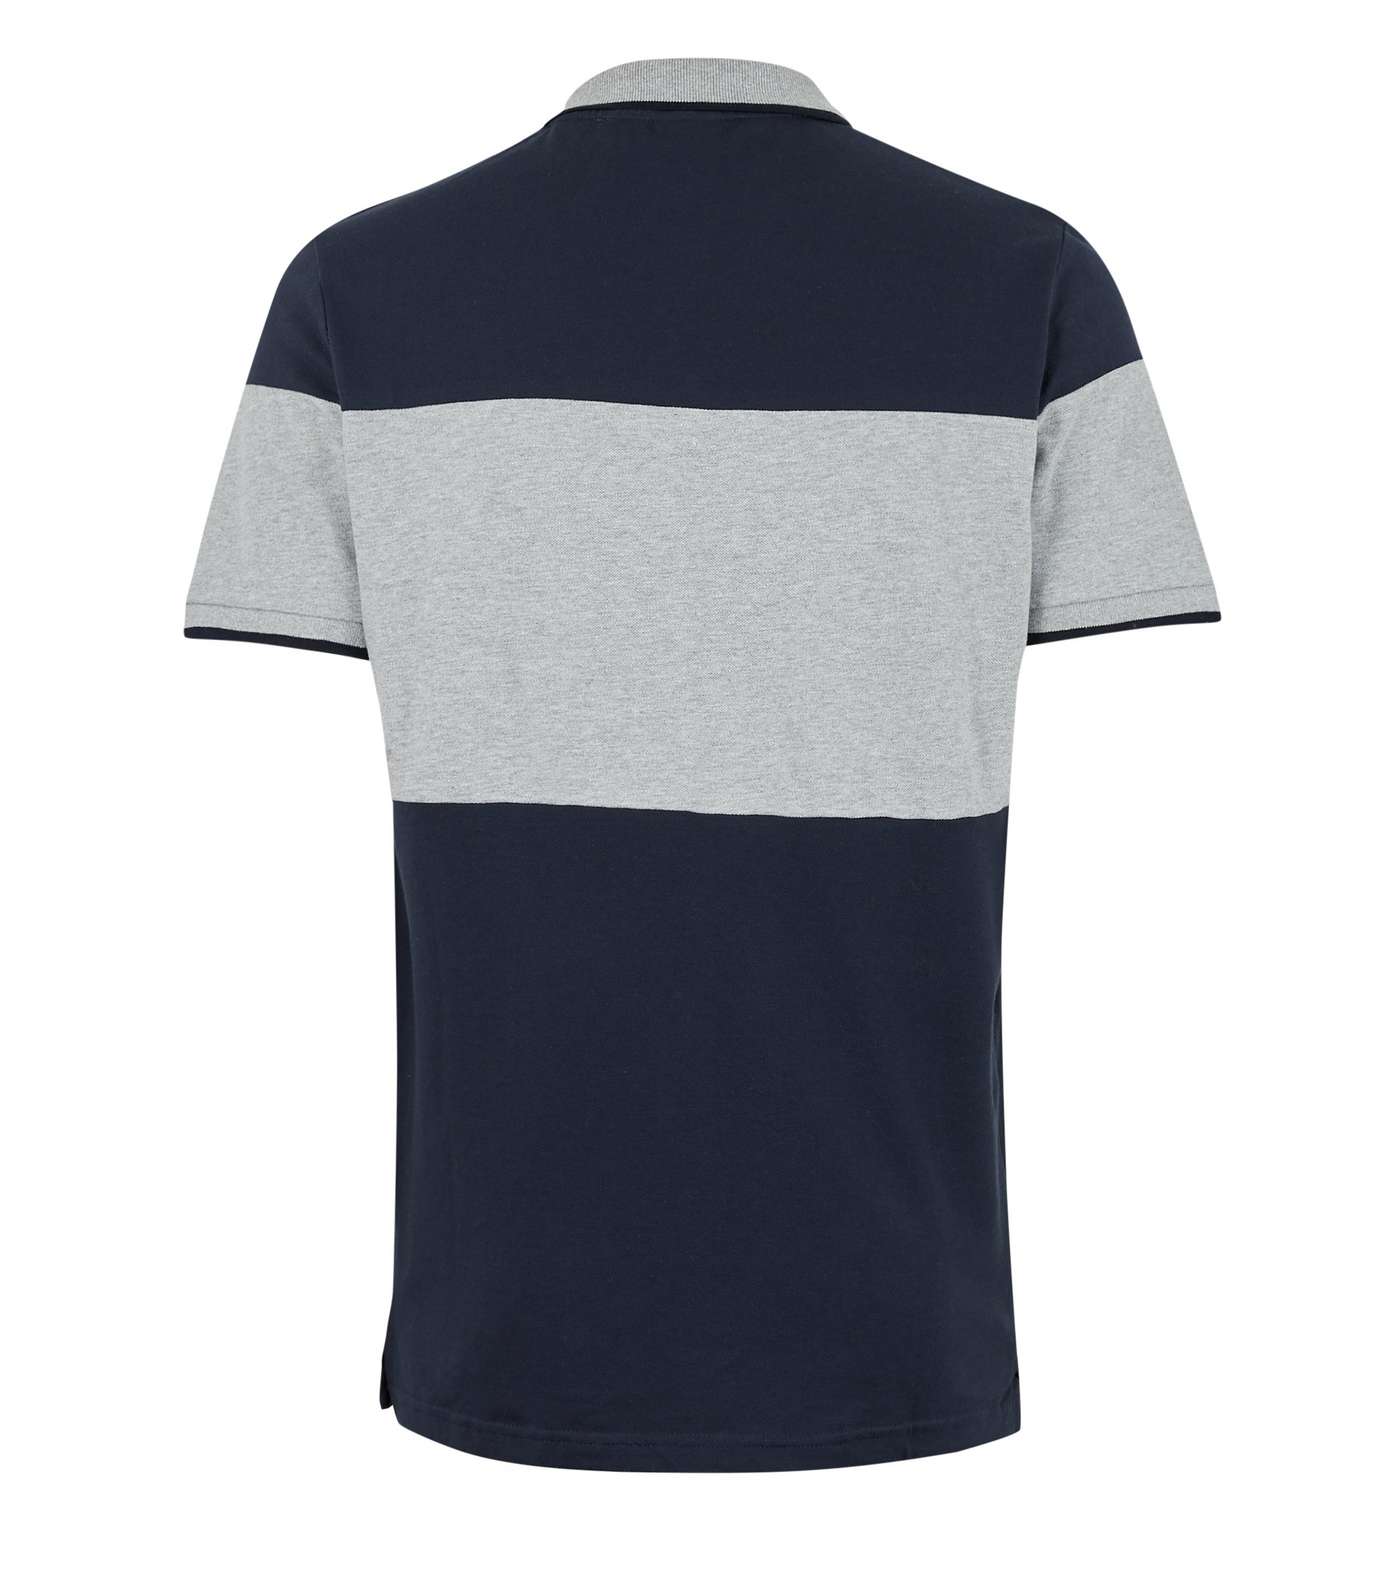 Jack & Jones Navy Contrast Stripe Polo Shirt Image 2